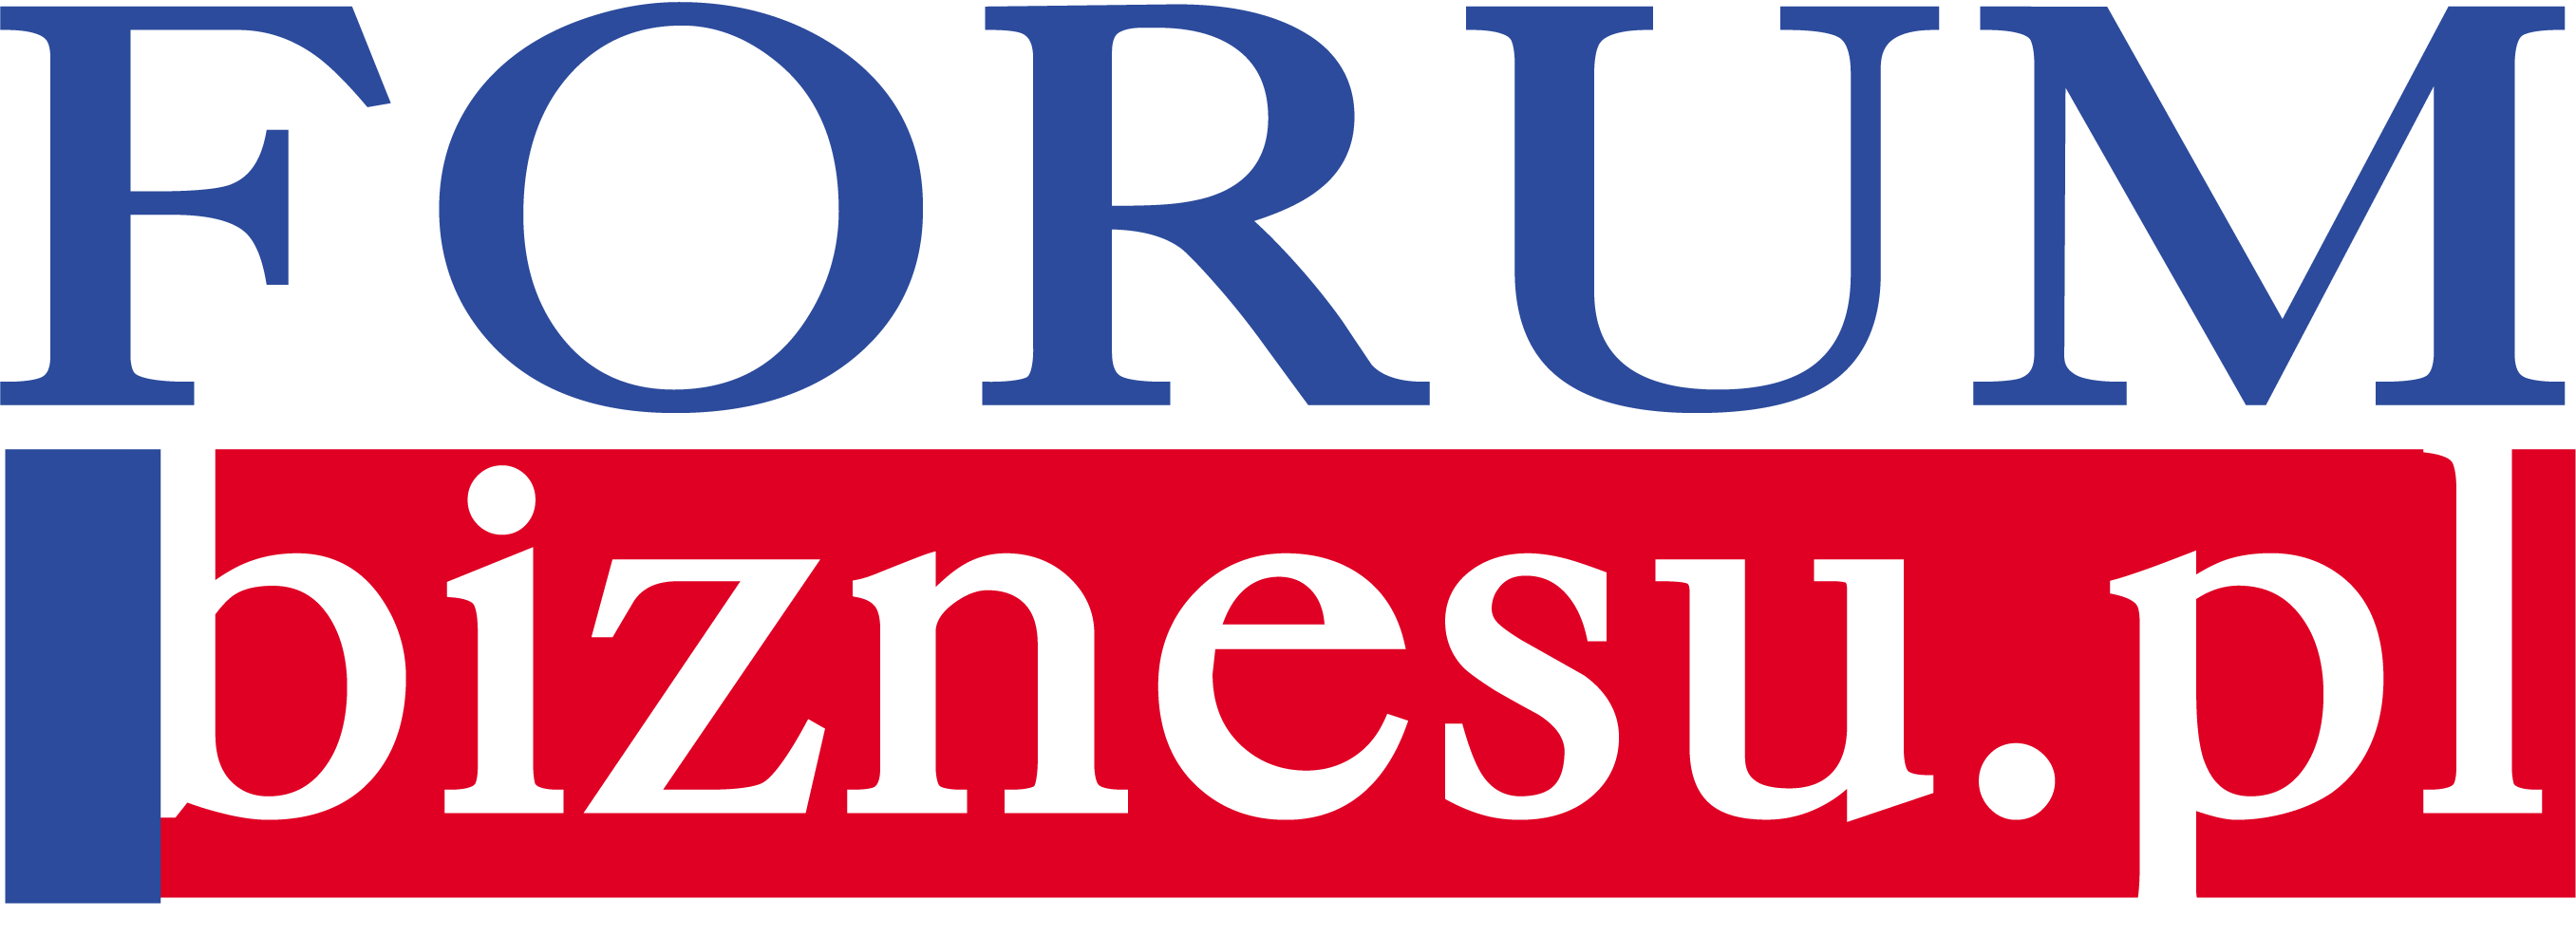 Forum Biznesu logo